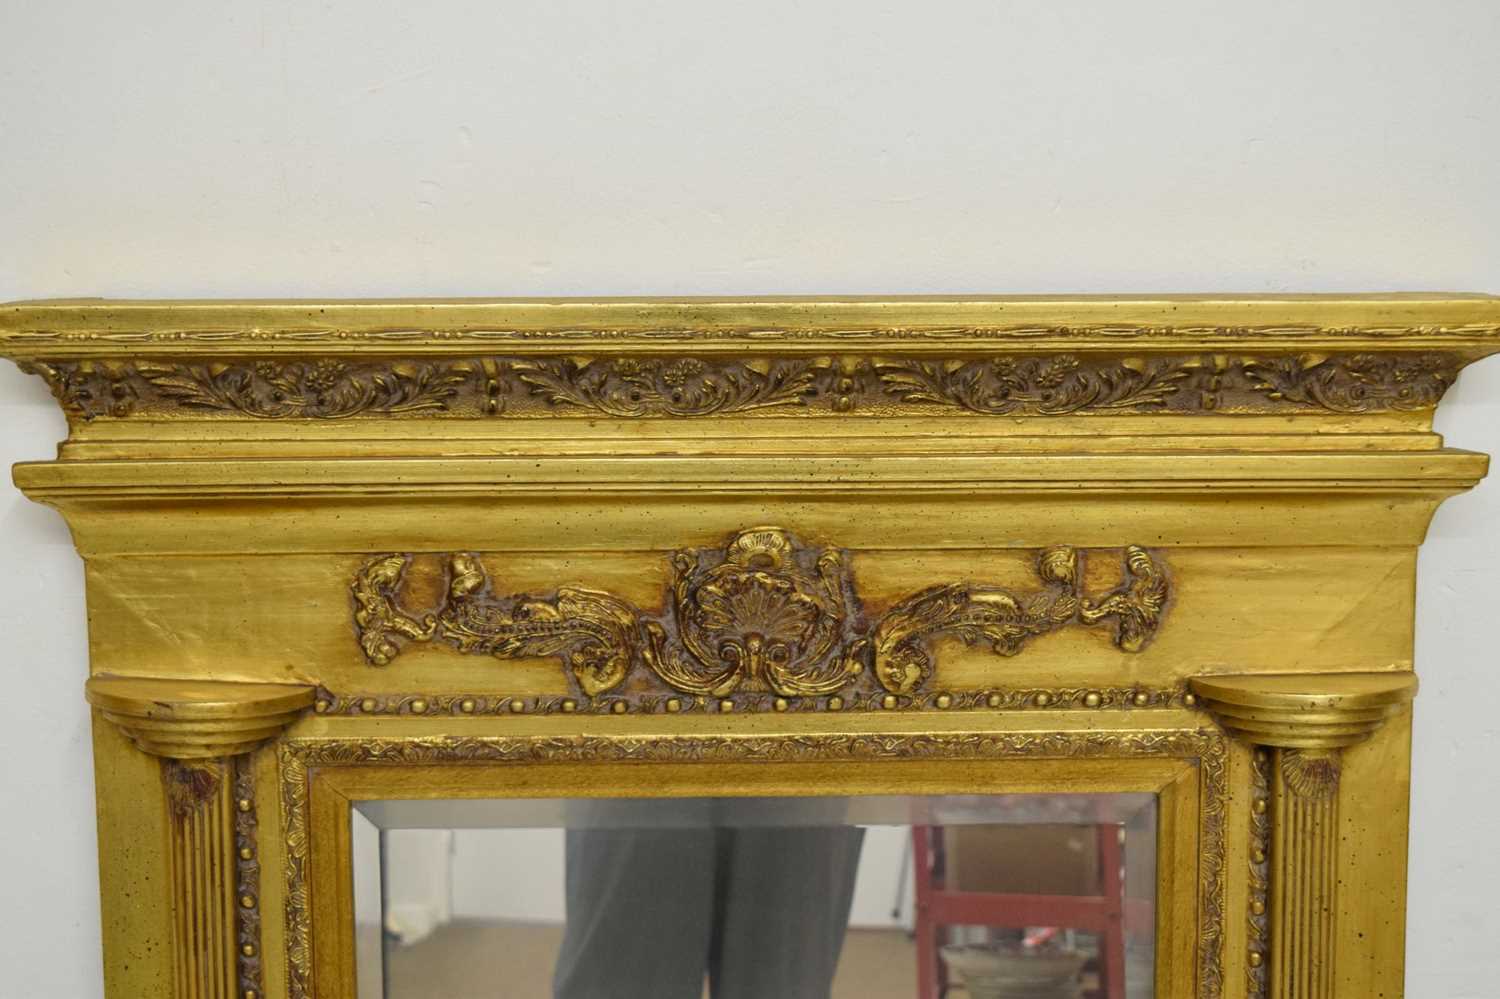 Reproduction giltwood rectangular wall mirror - Image 3 of 8